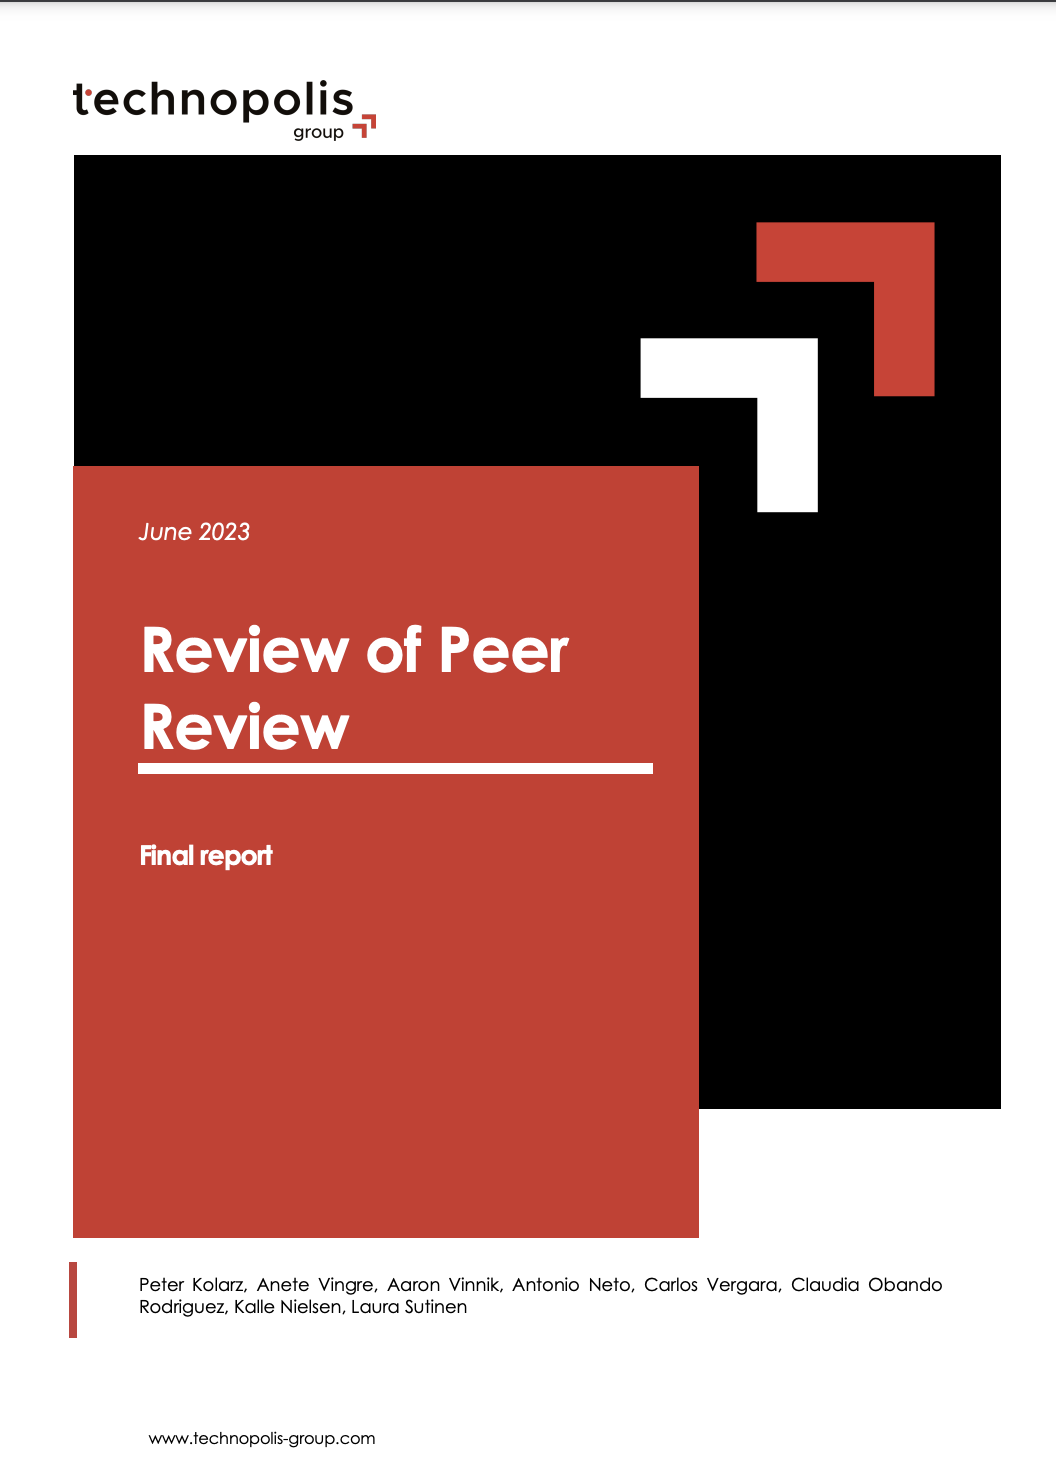 Review of peer review